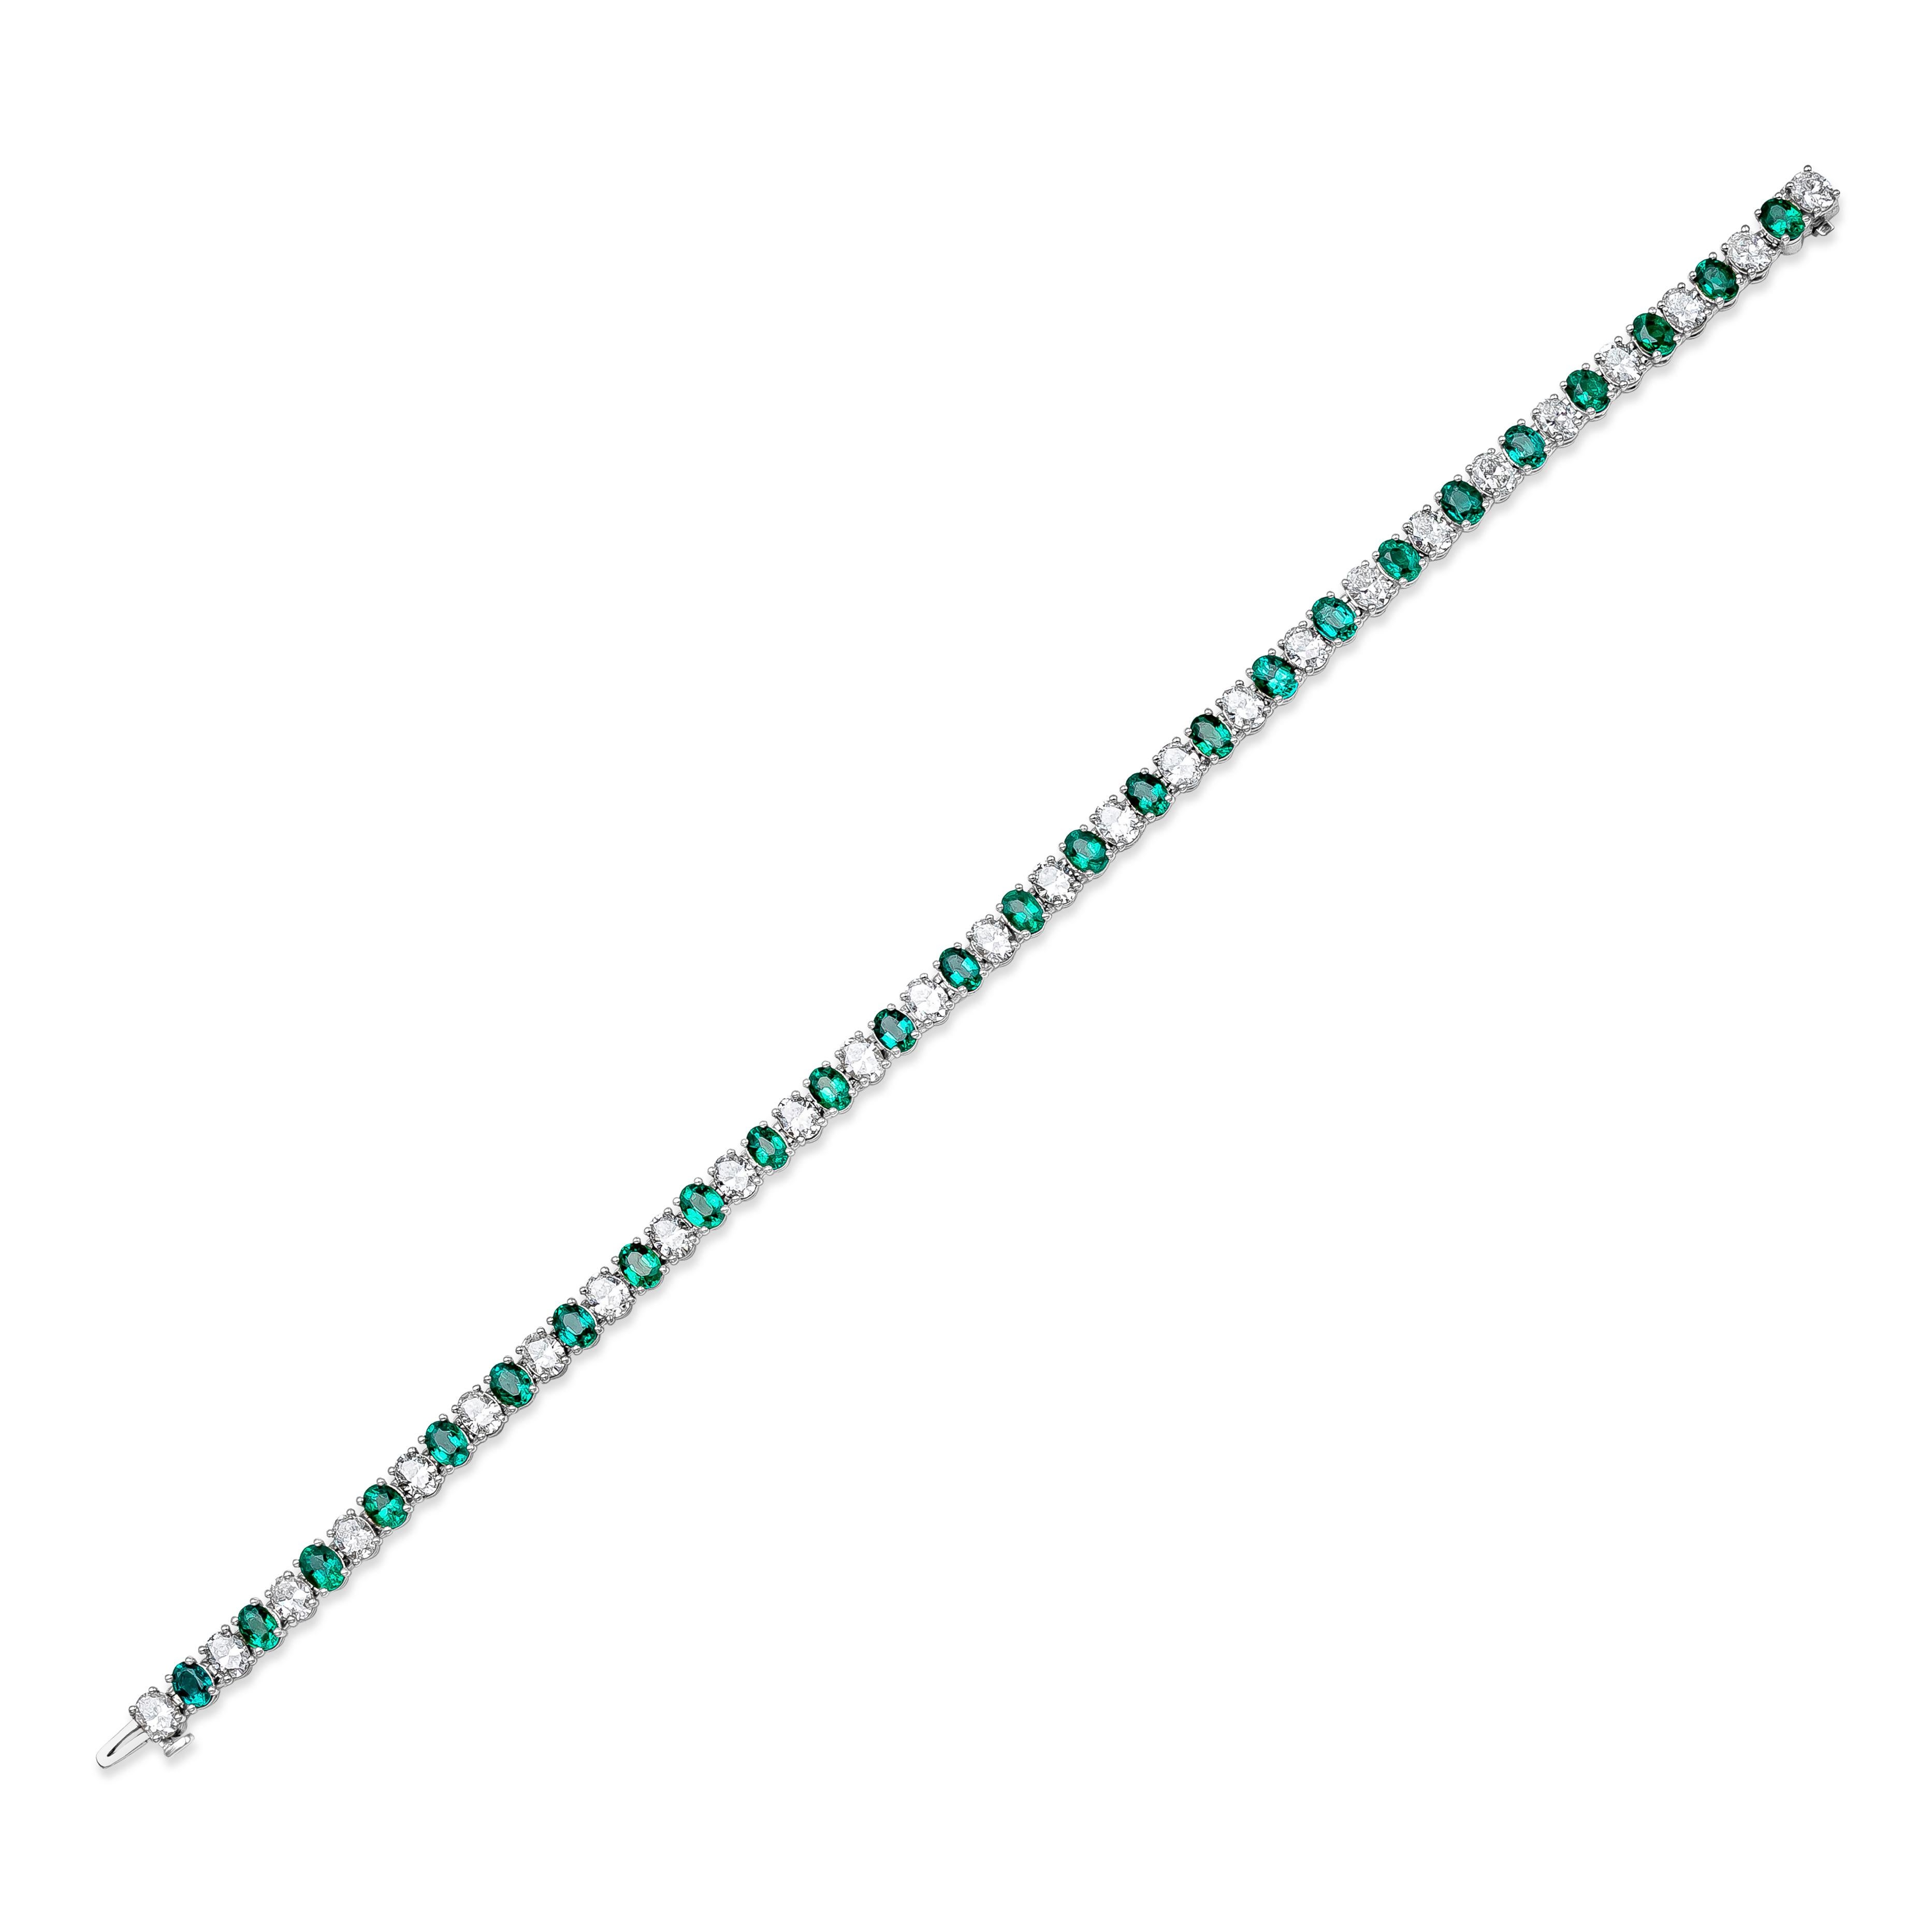 Contemporary Roman Malakov 8.00 Carats Total Alternating Emerald and Diamond Tennis Bracelet